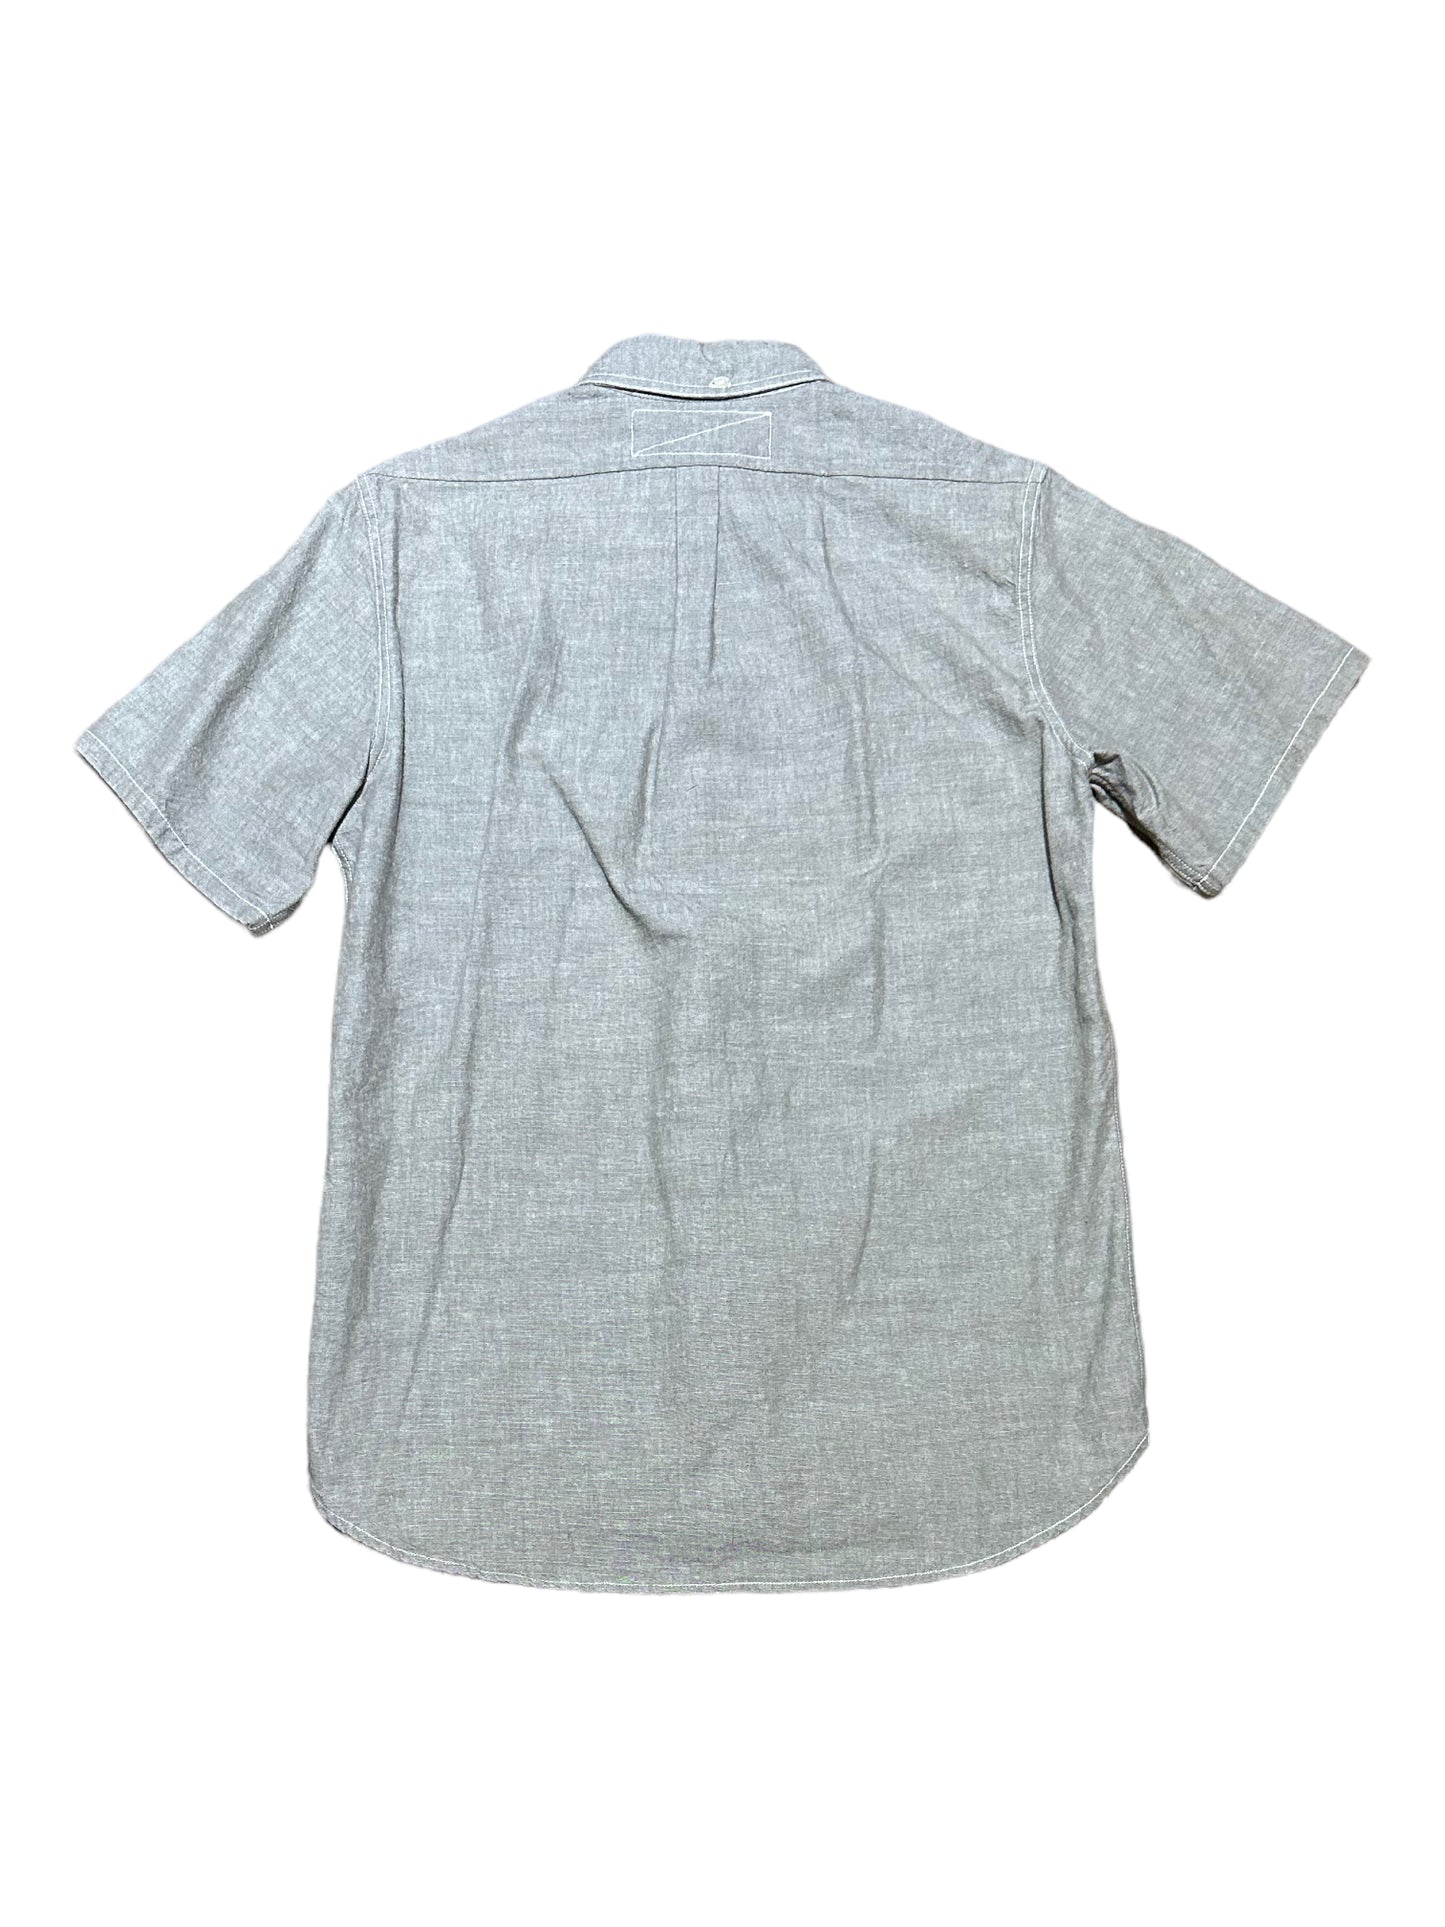 Rogue Territory Grey Cotton Short Sleeve Button Up Casual Shirt